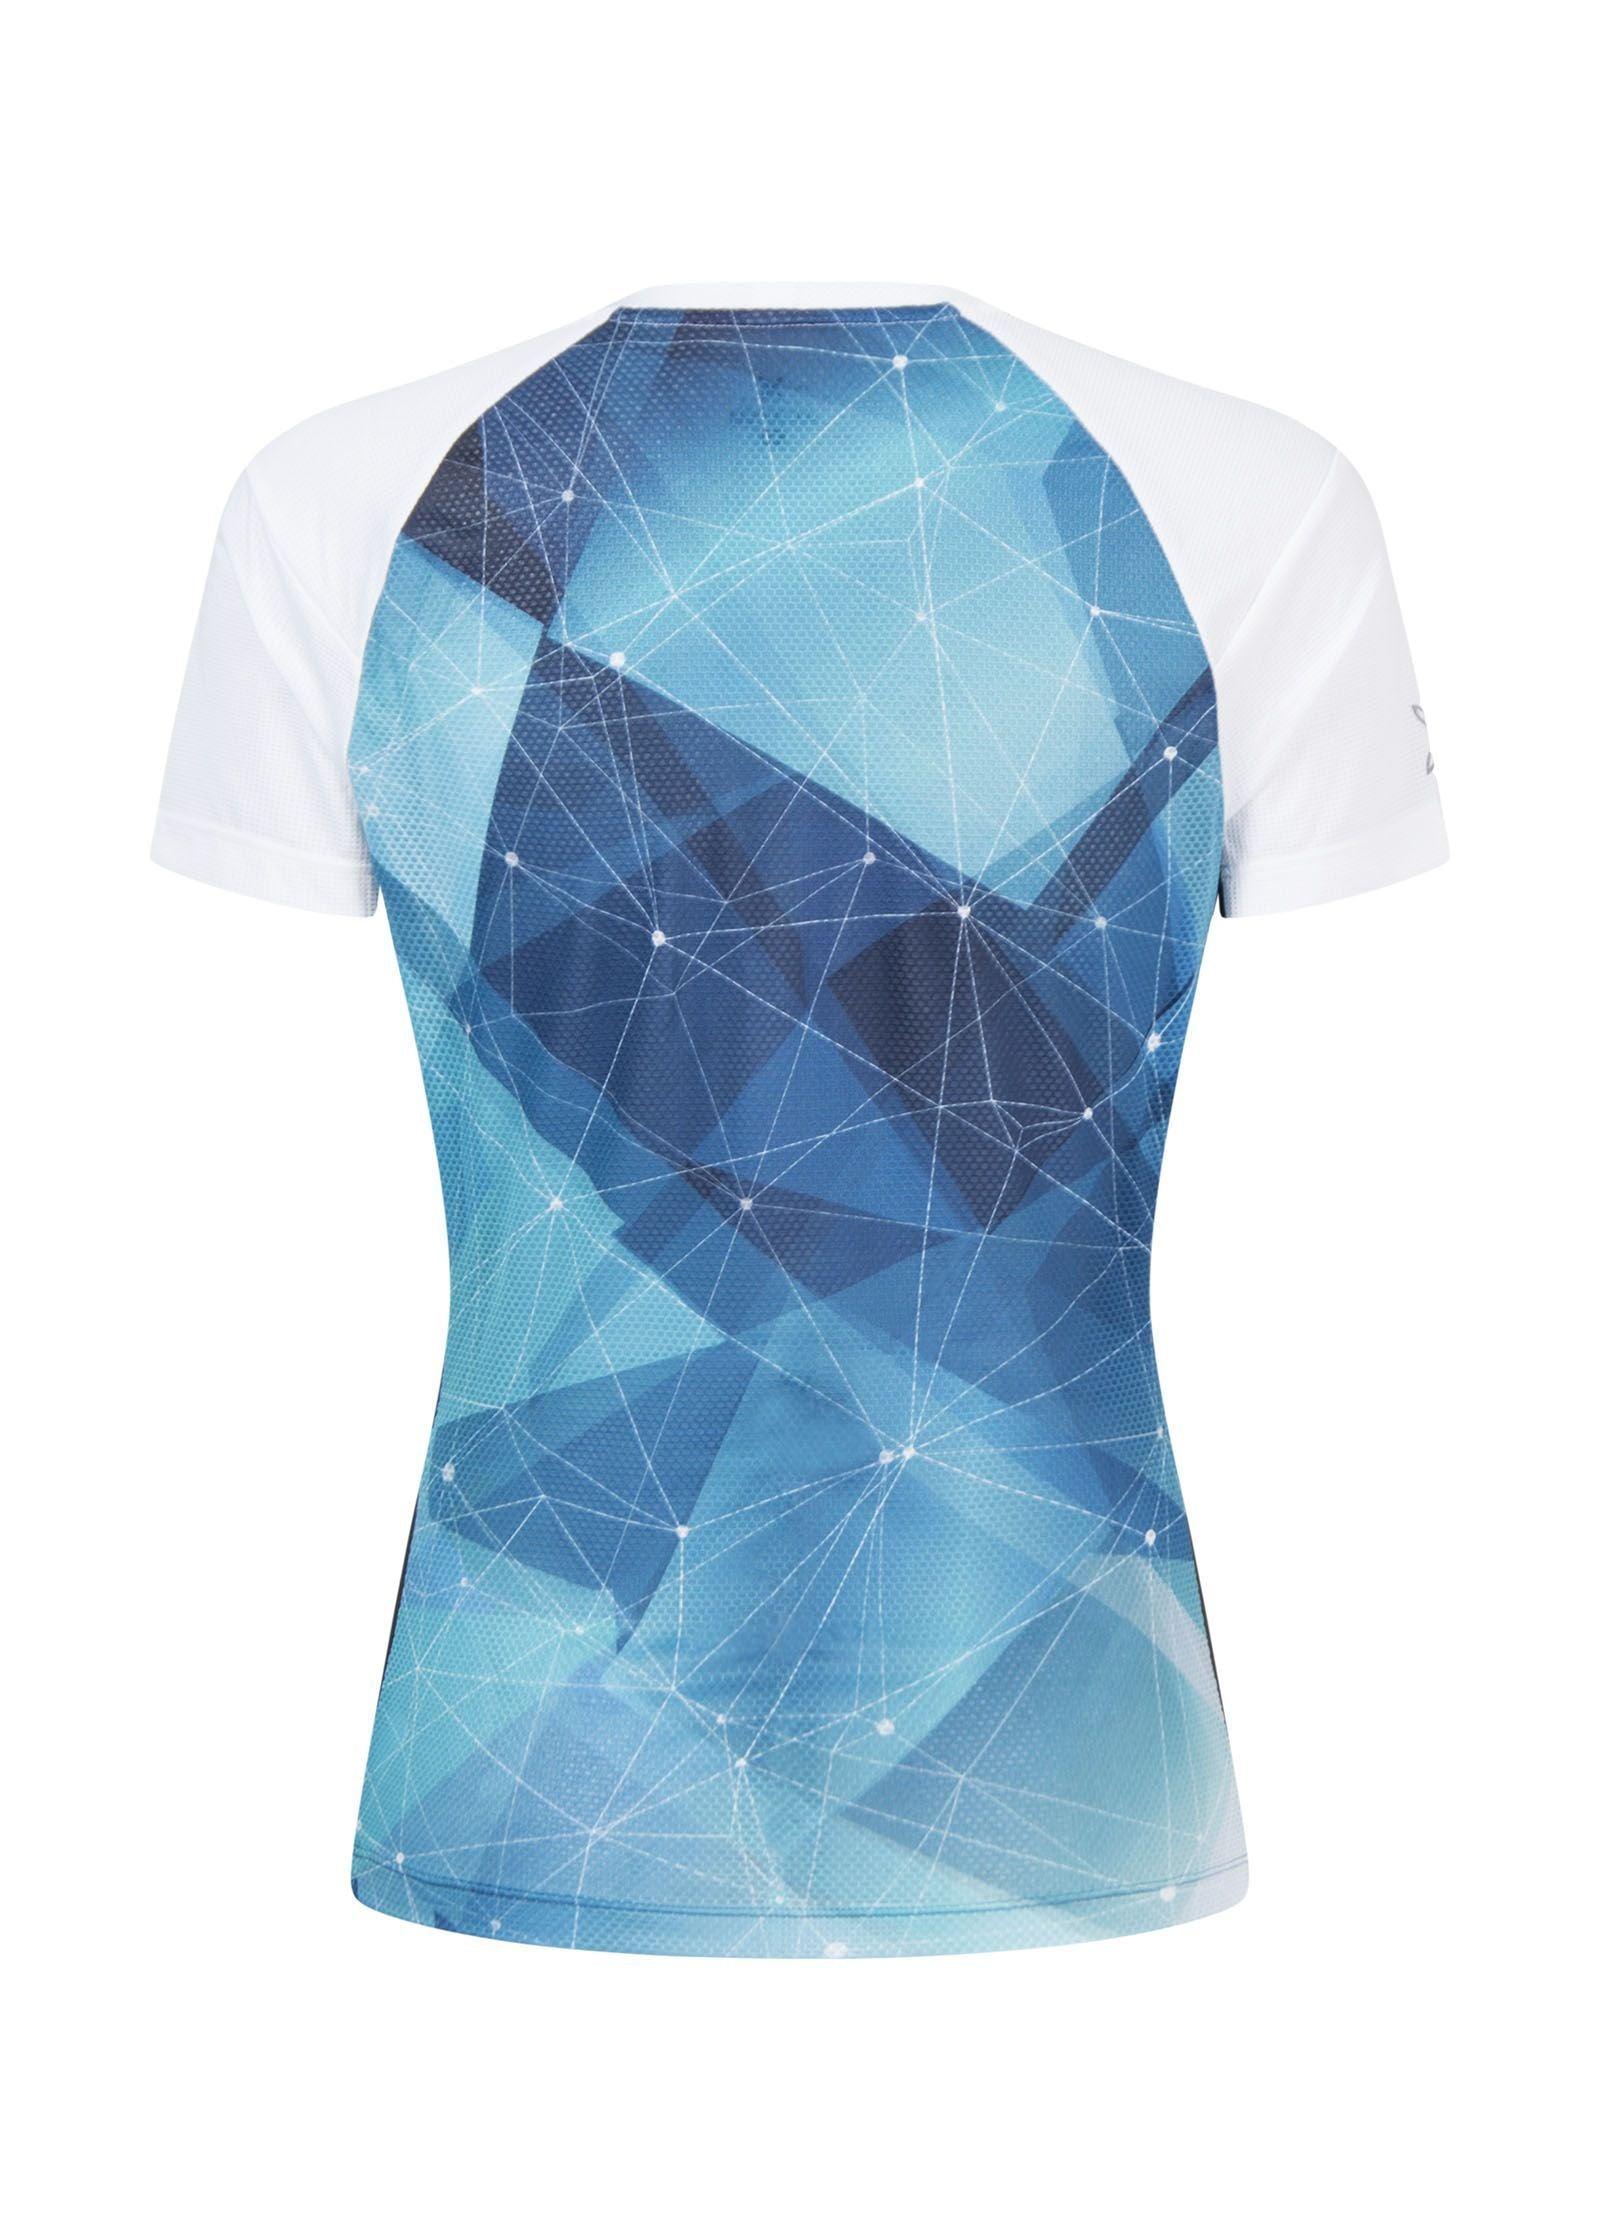 Montura | T-shirt Ghost Donna Ice Blu/Bianco - Fabbrica Ski Sises